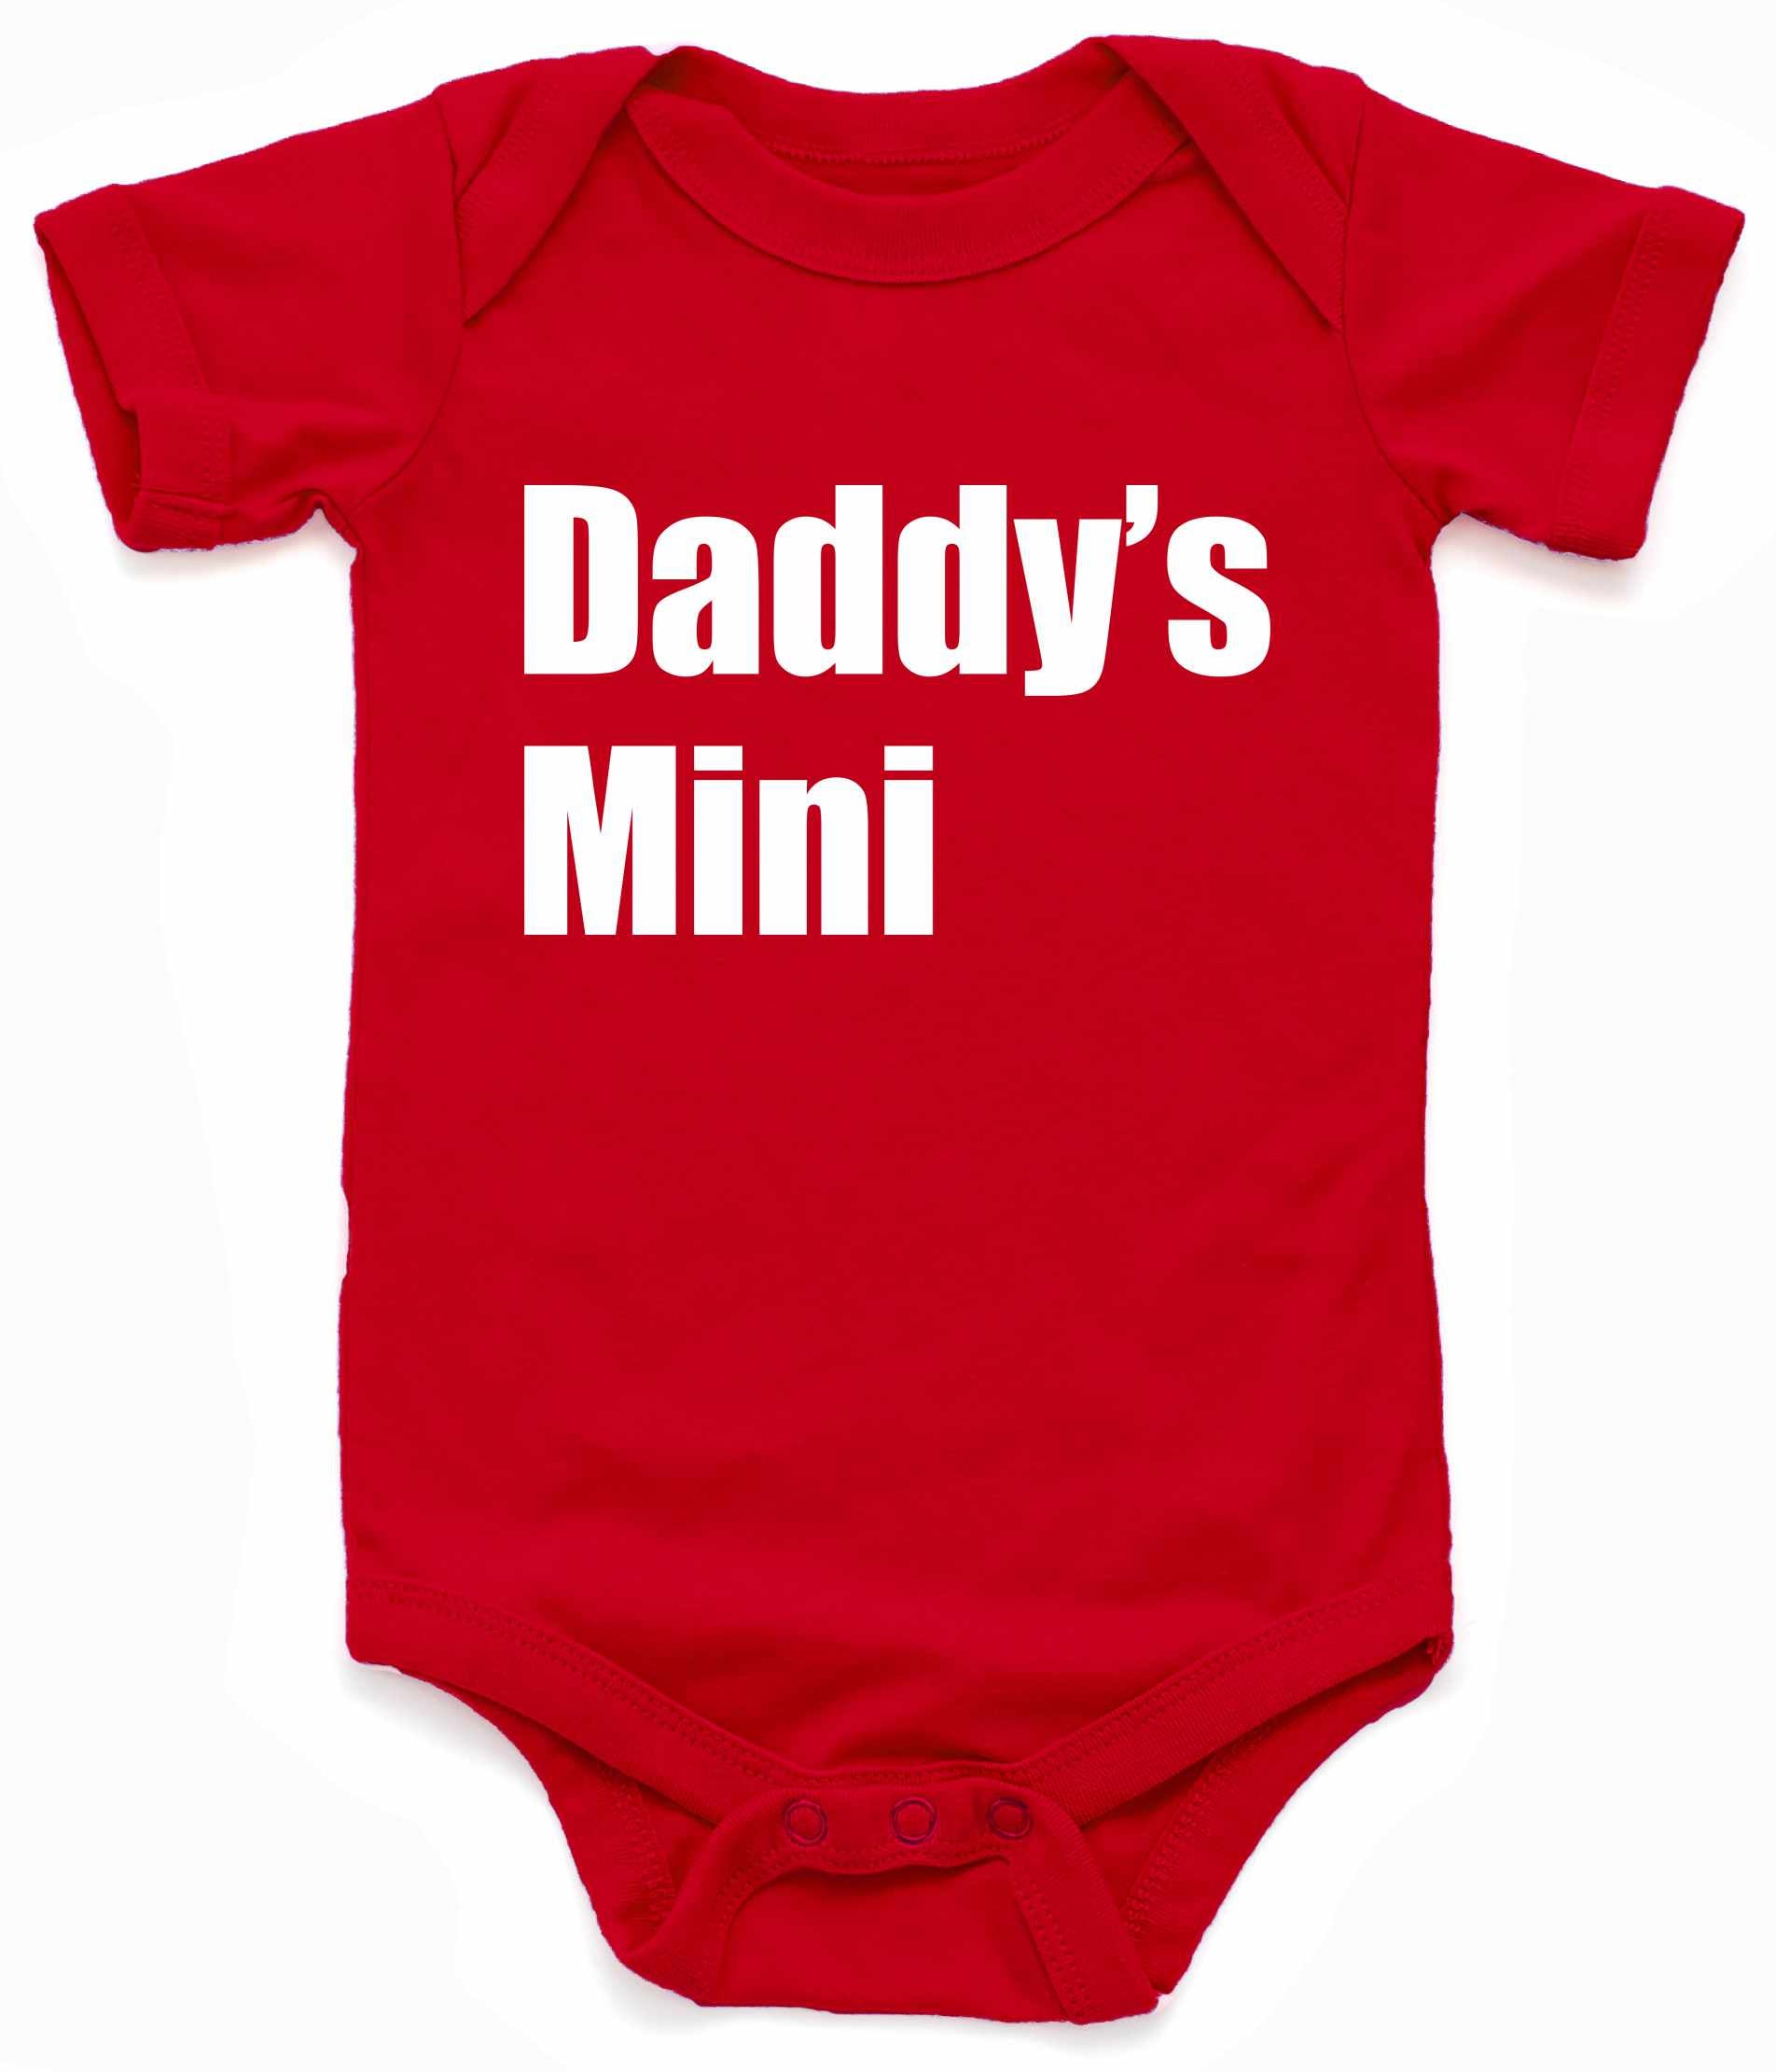 Daddy's Mini Infant BodySuit - Red / NewBorn - Red / 6 Month - Red / 12 Month - Red / 18 Month - Red / 24 Month